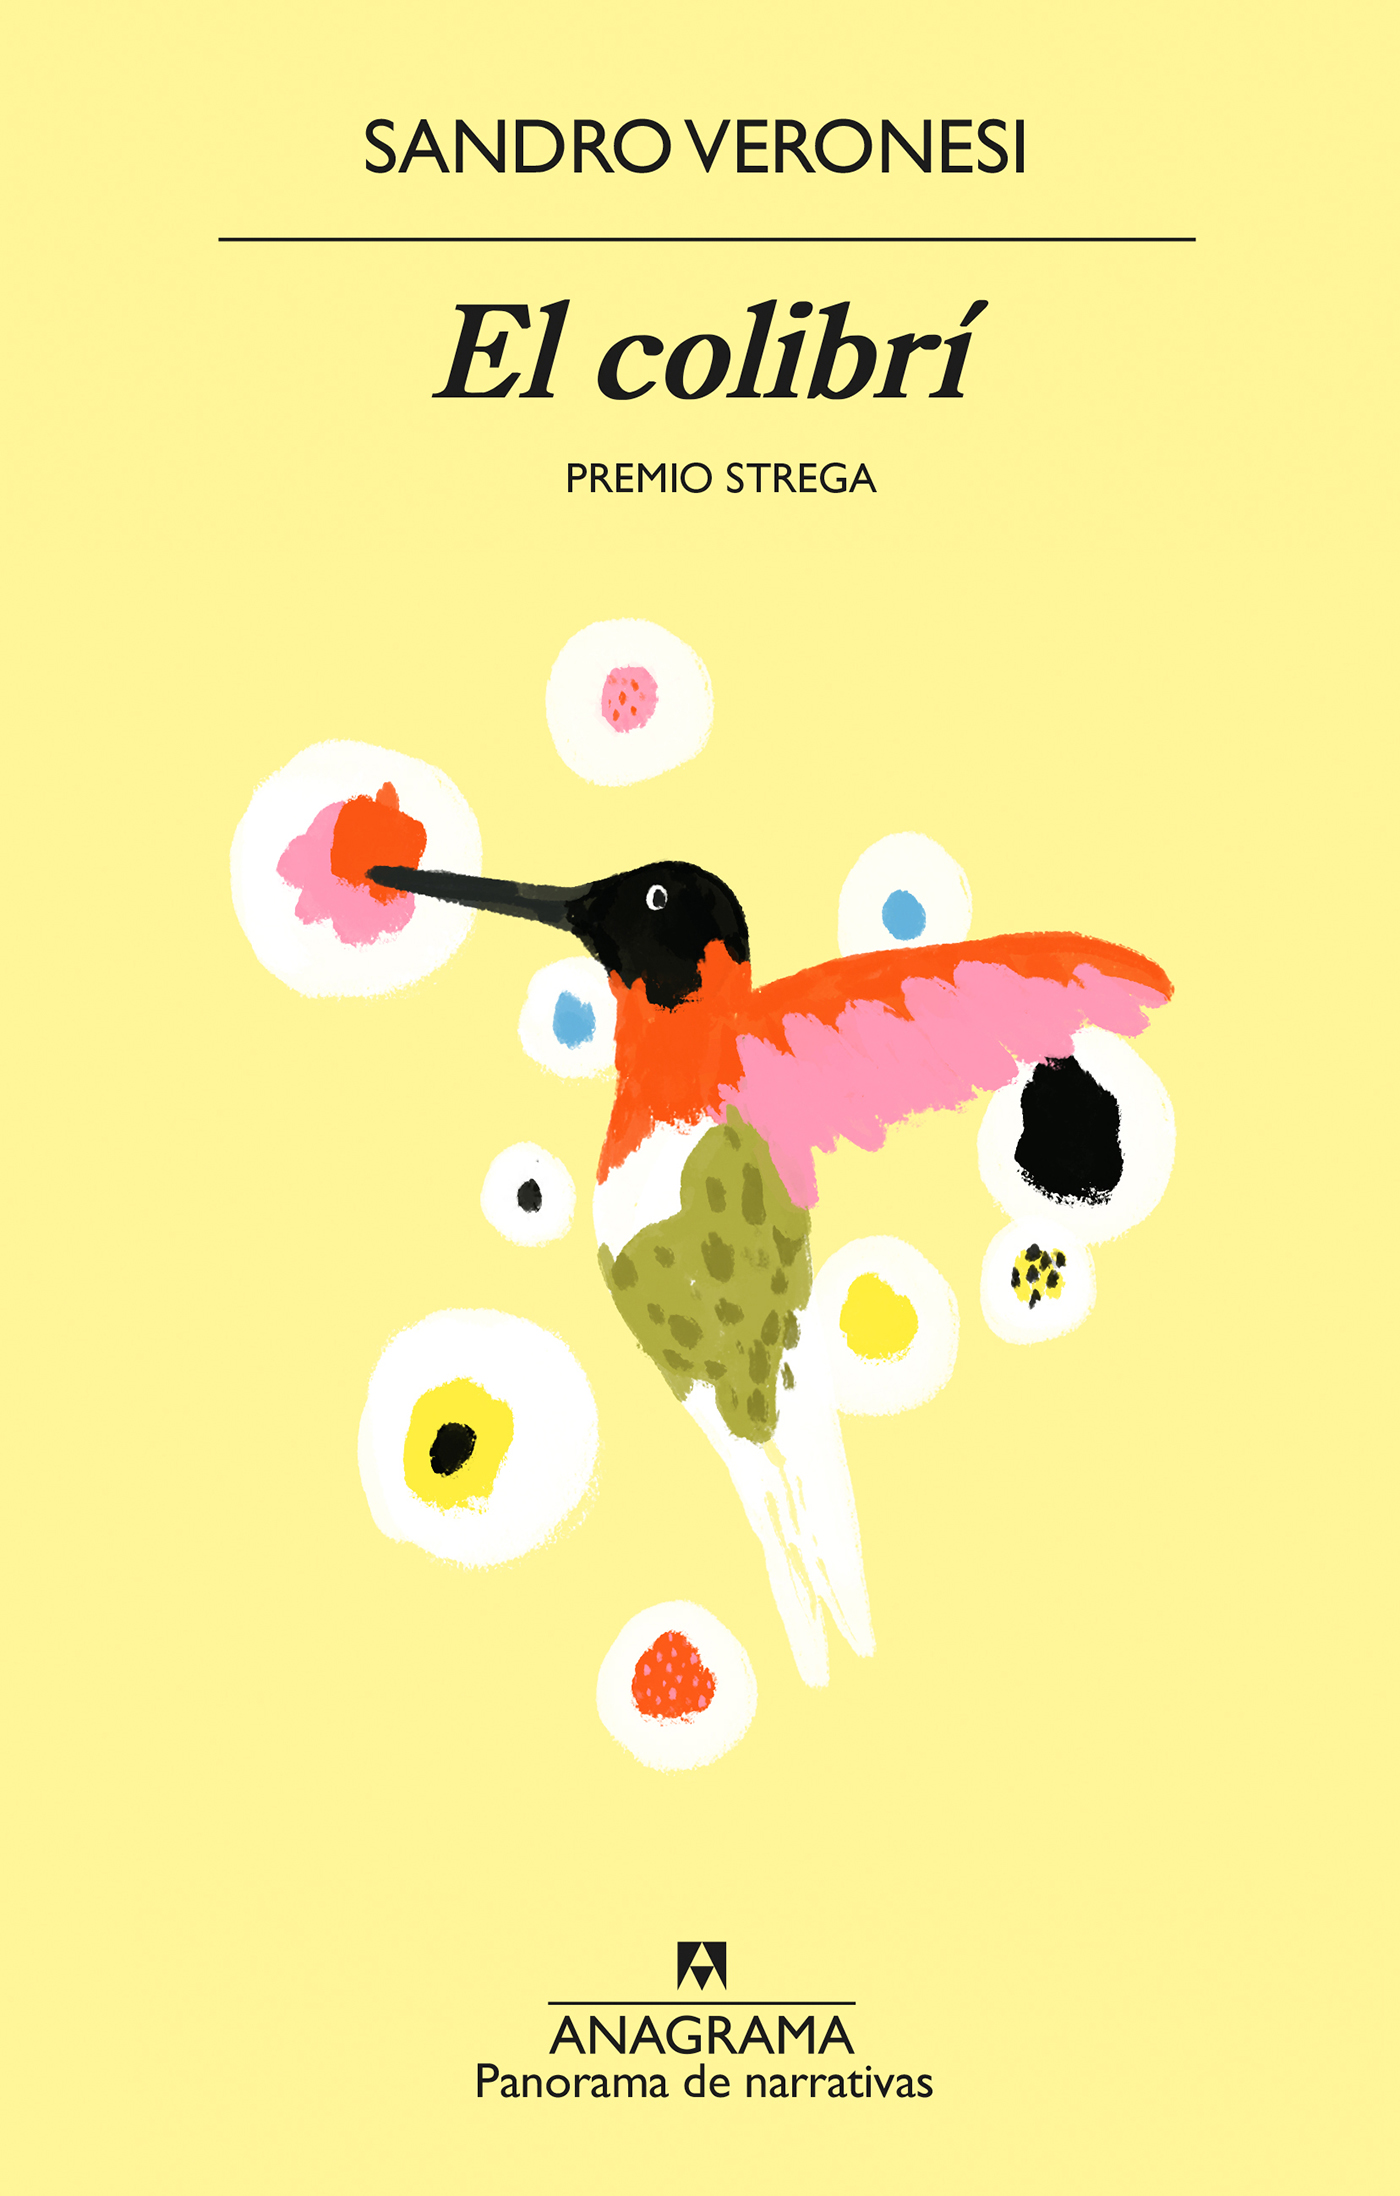 el-colibri-sandro-veronesi-book-cover-hummingbird-illustration-violeta-noy